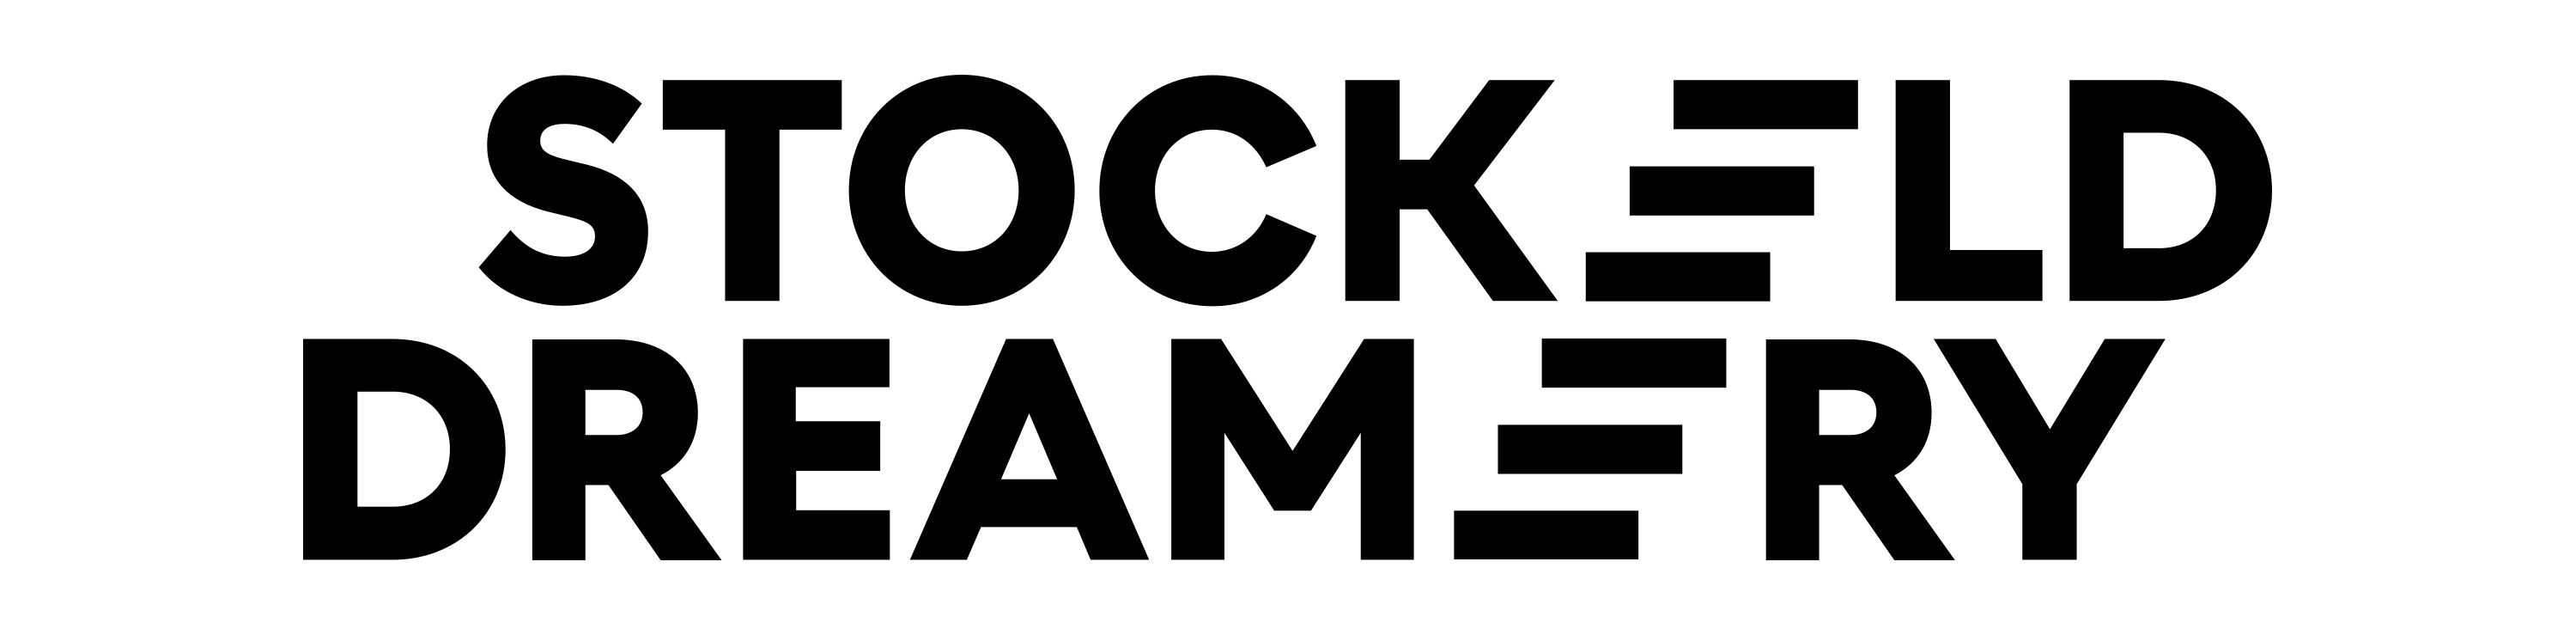 Stockeld Dreamery Logotype